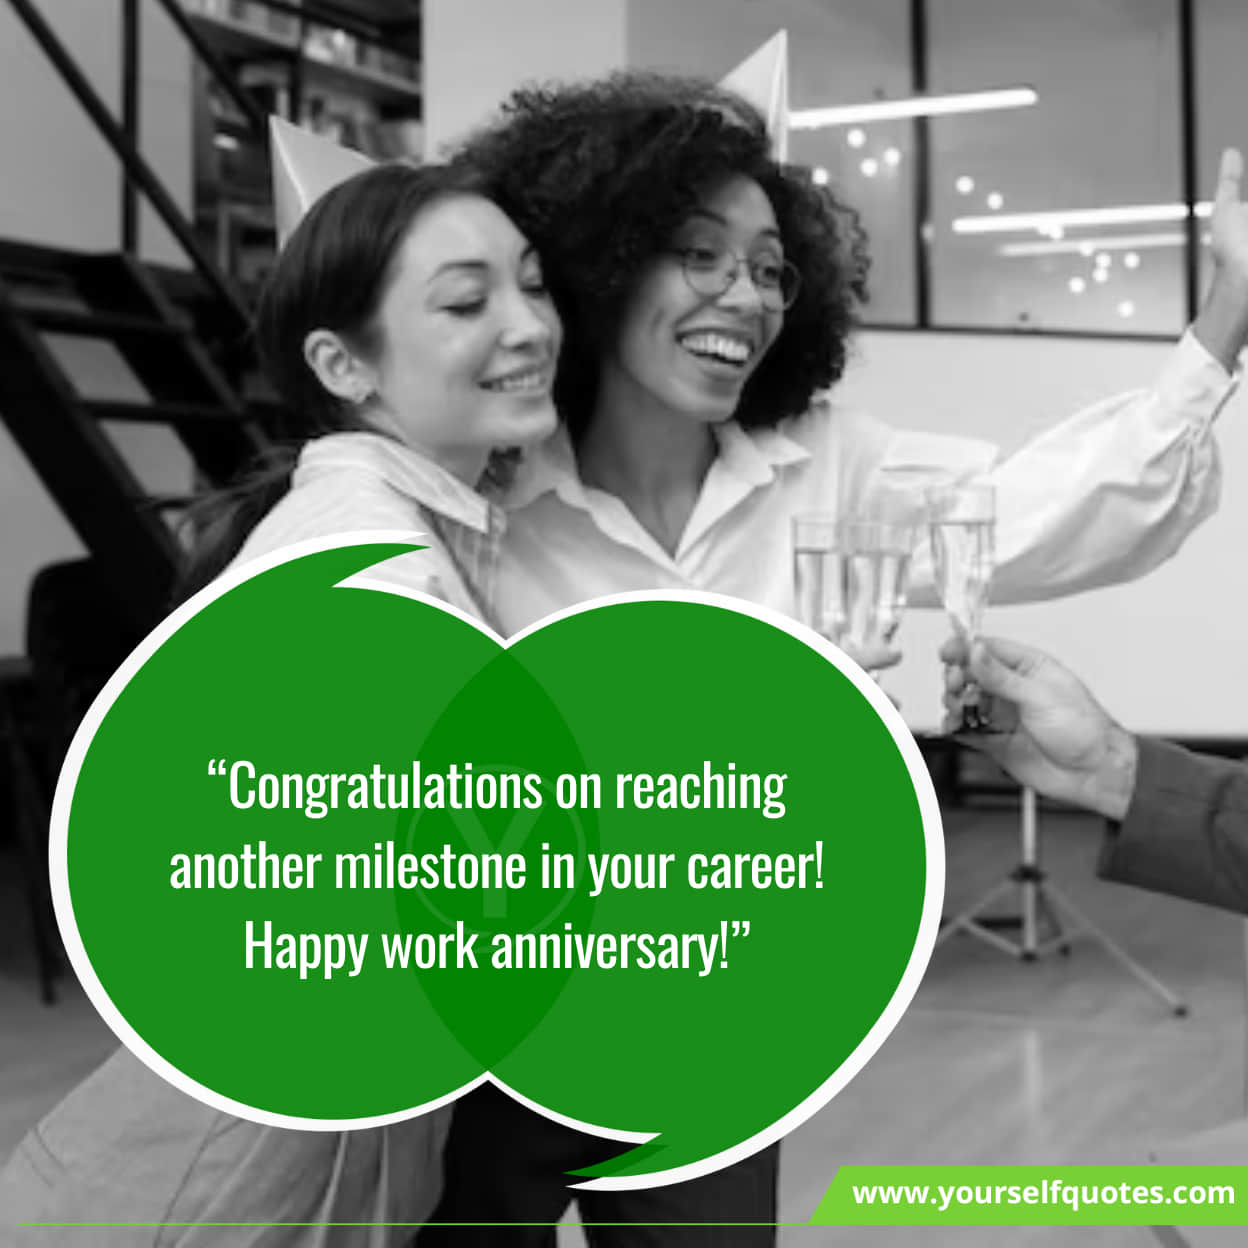 Congratulating on work anniversary